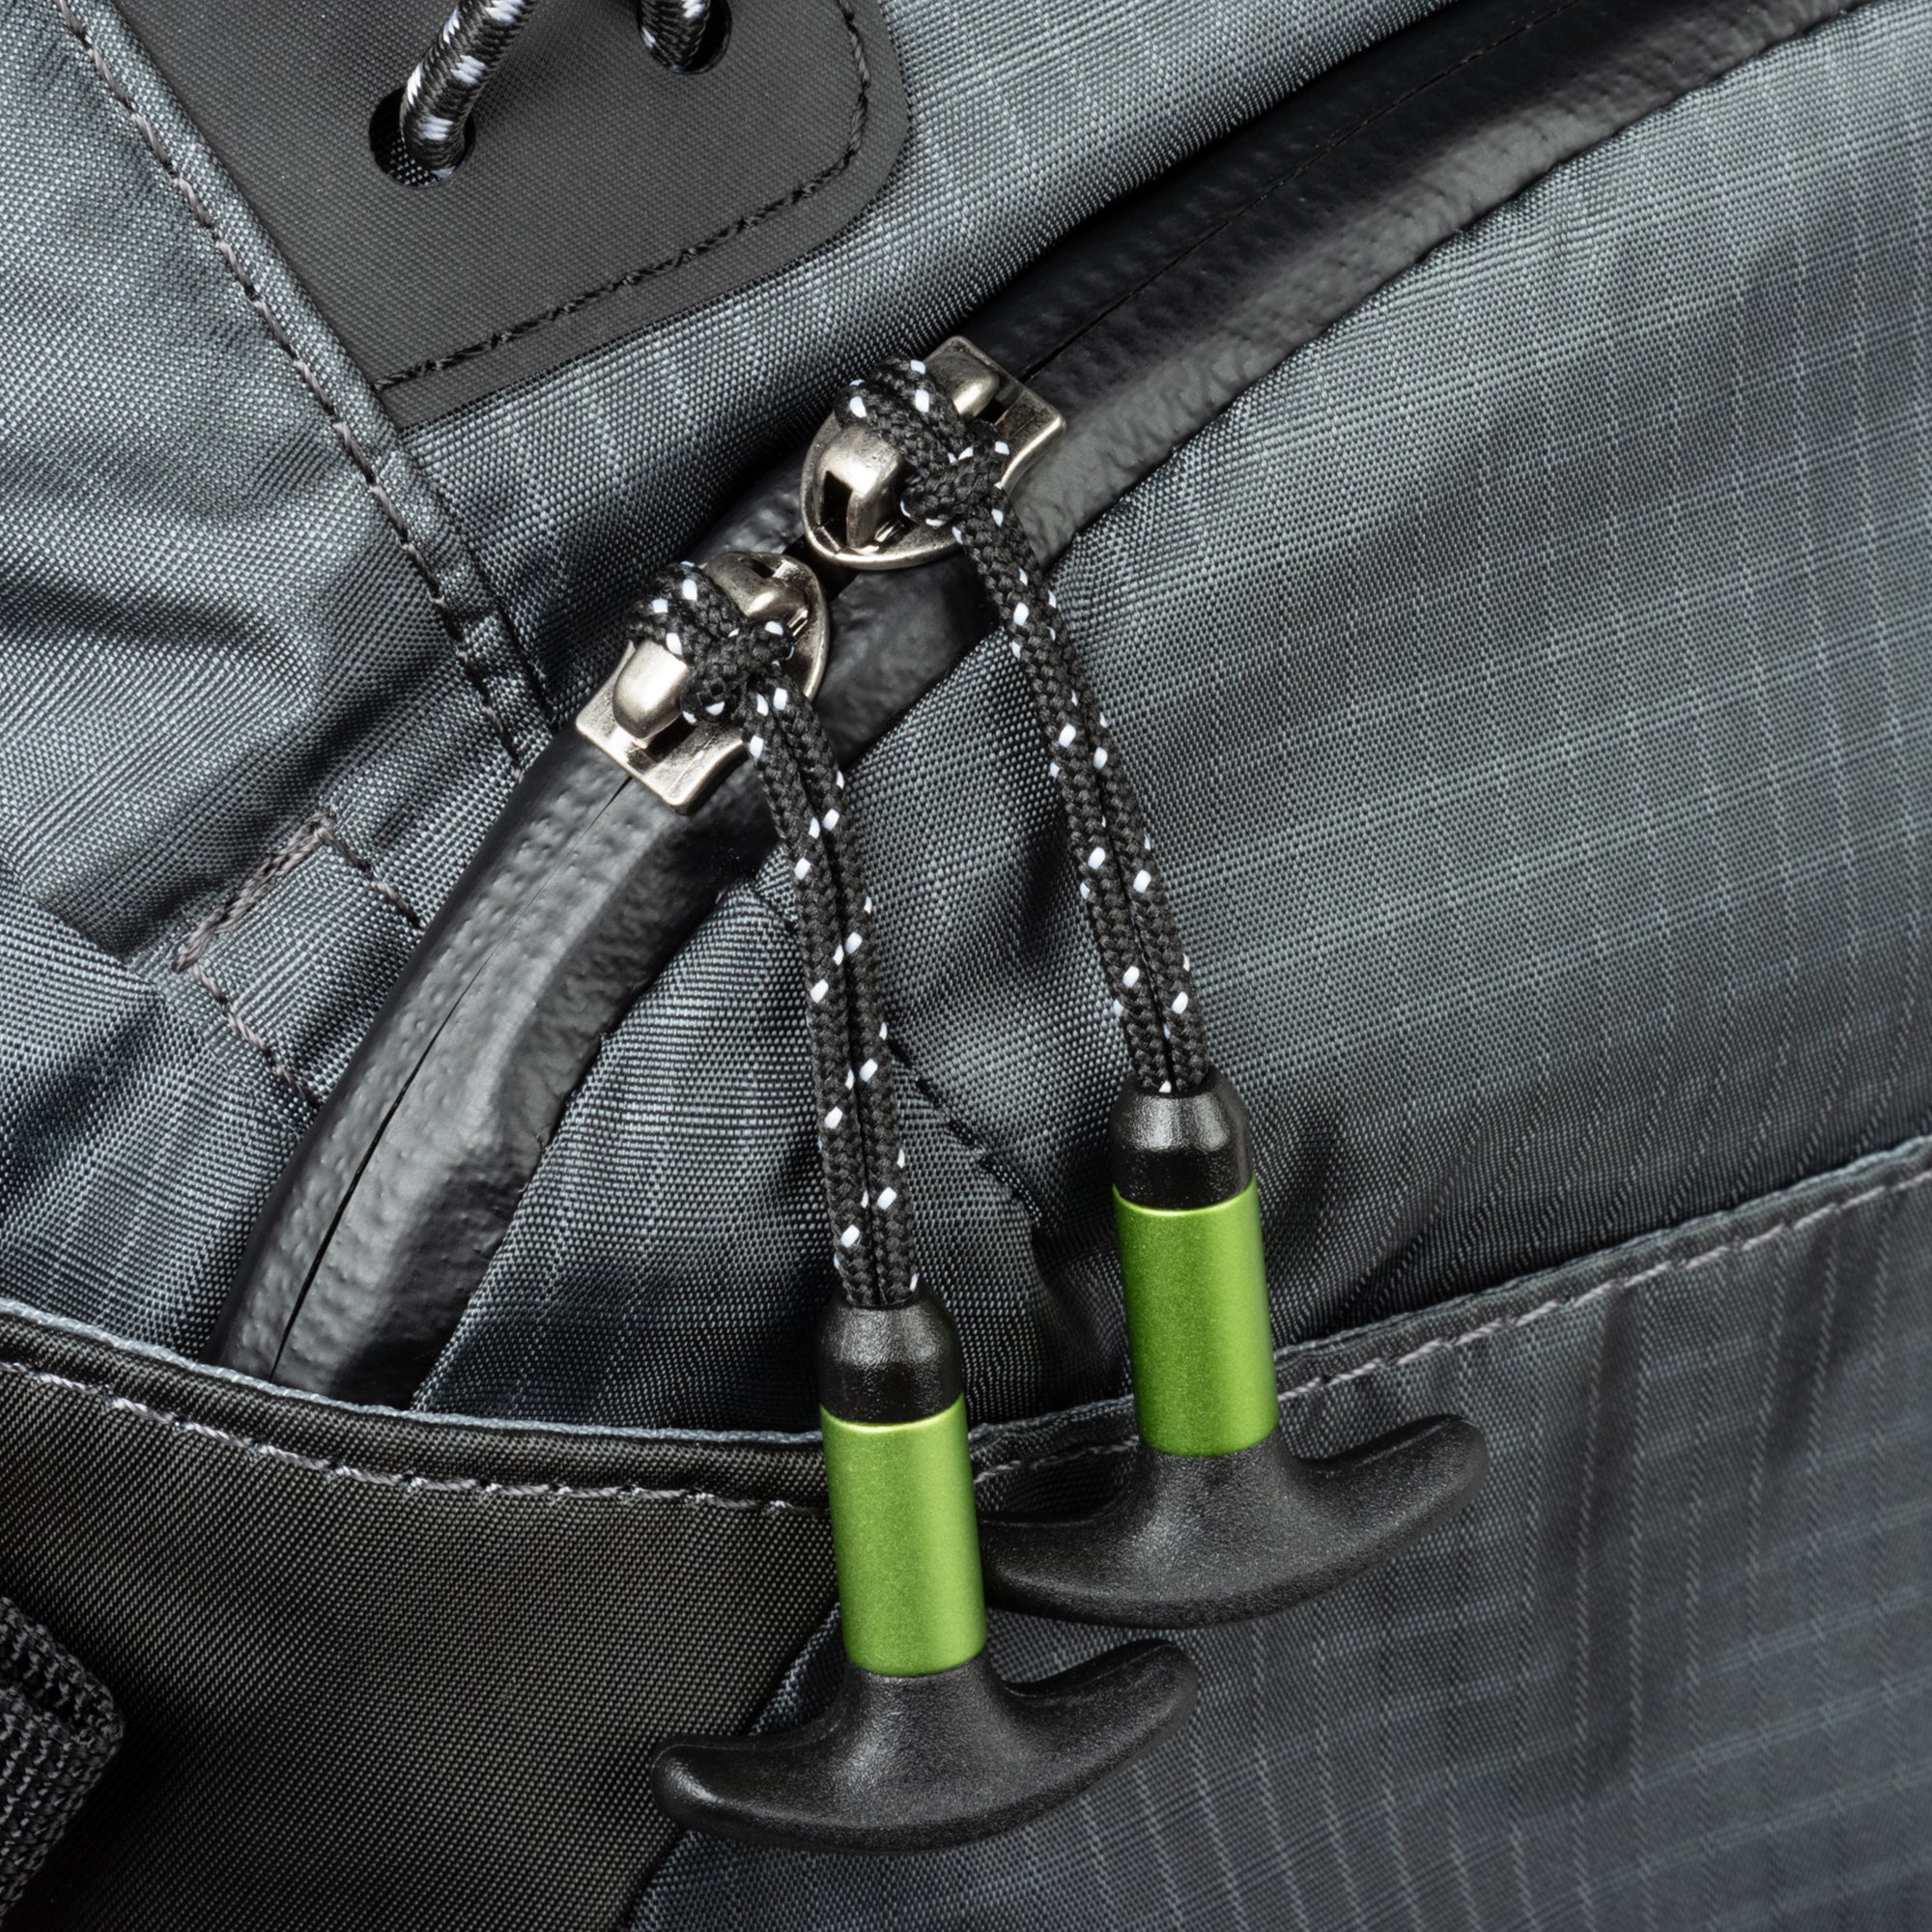 YKK Aqua Seal zippers with T-pull sliders 